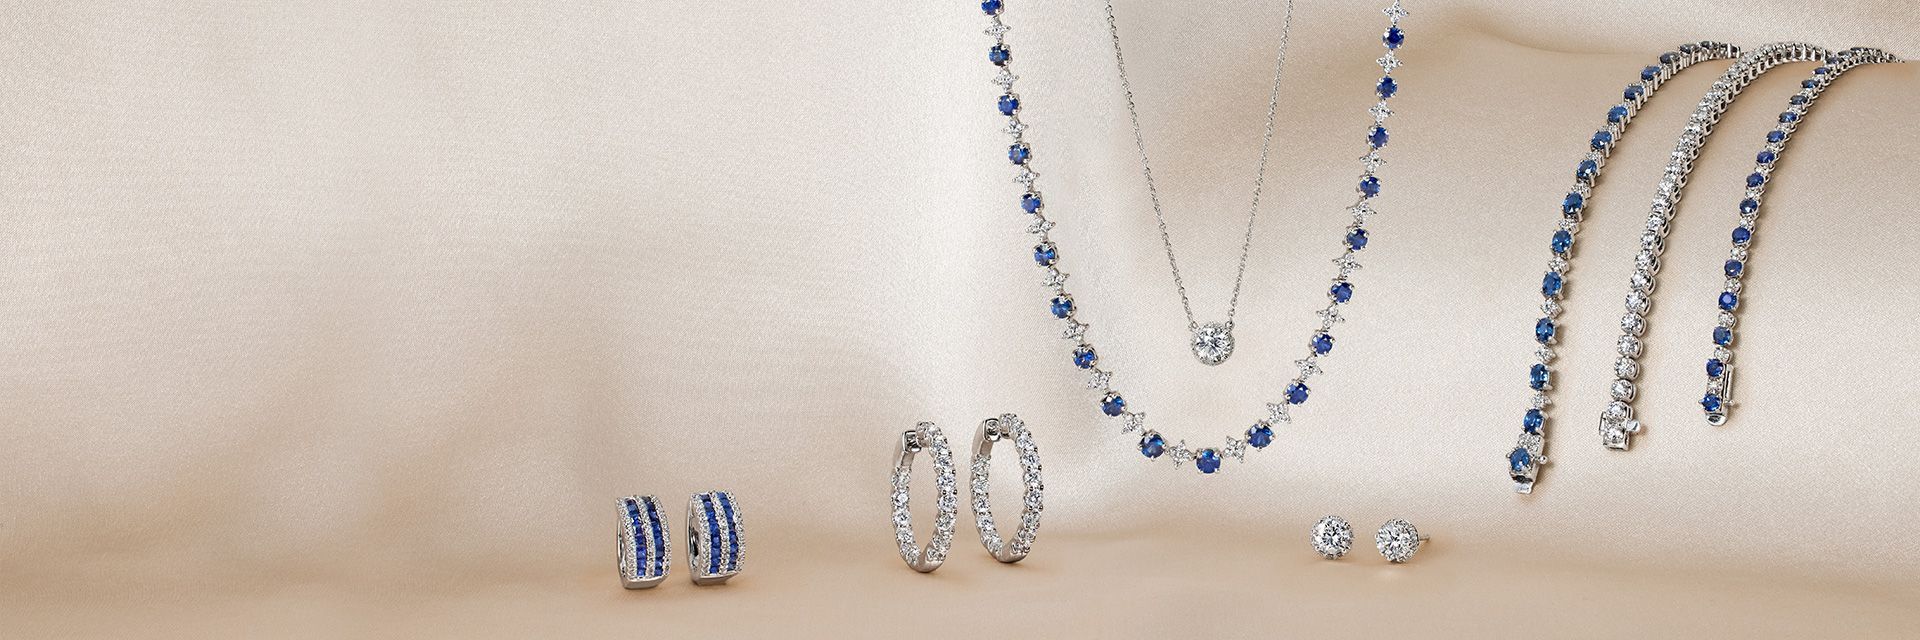 Blue Nile diamond jewelry including earrings, a necklace and bracelets